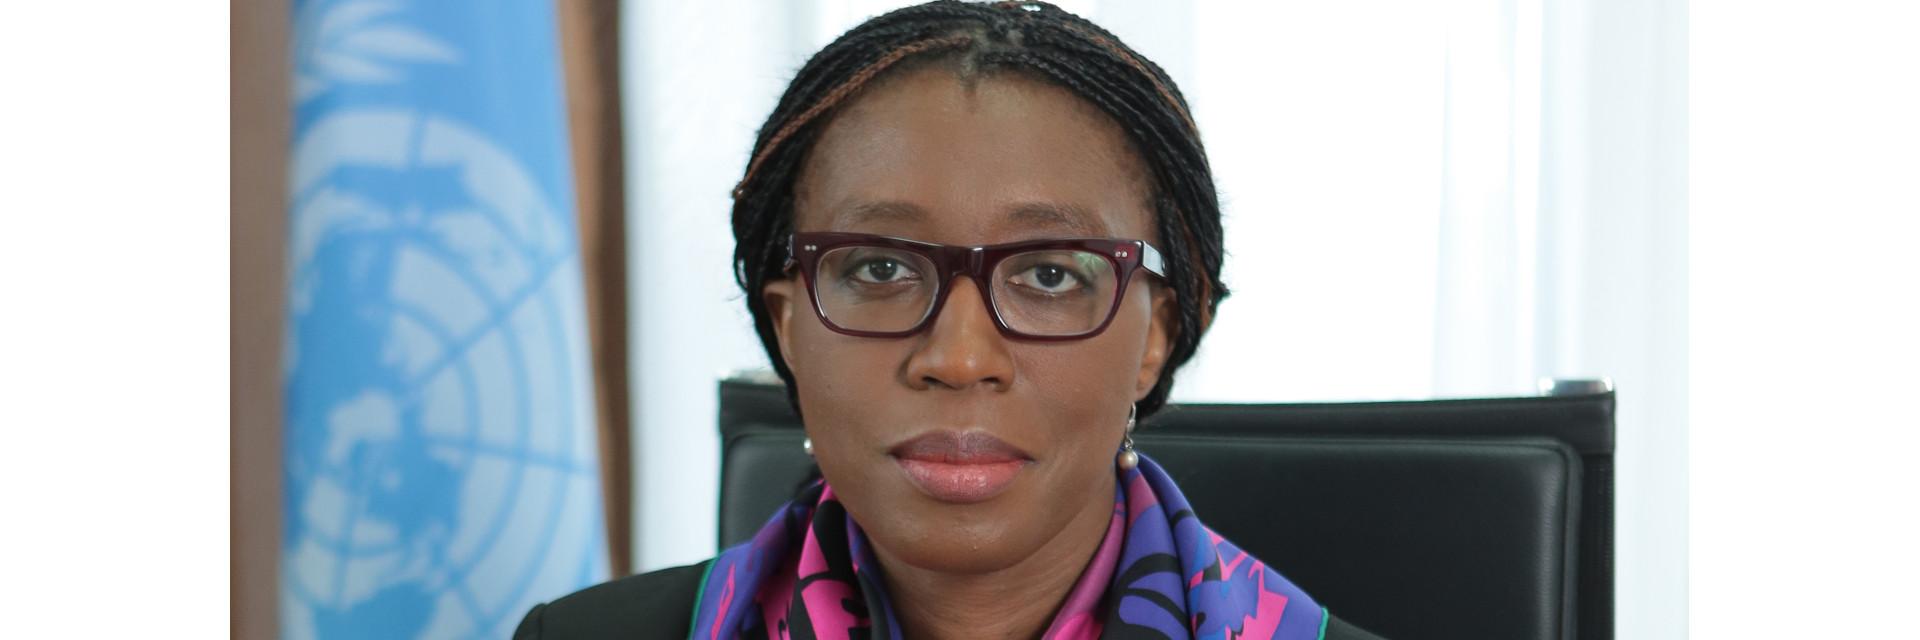 Vera Songwe steps down as ECA Executive Secretary